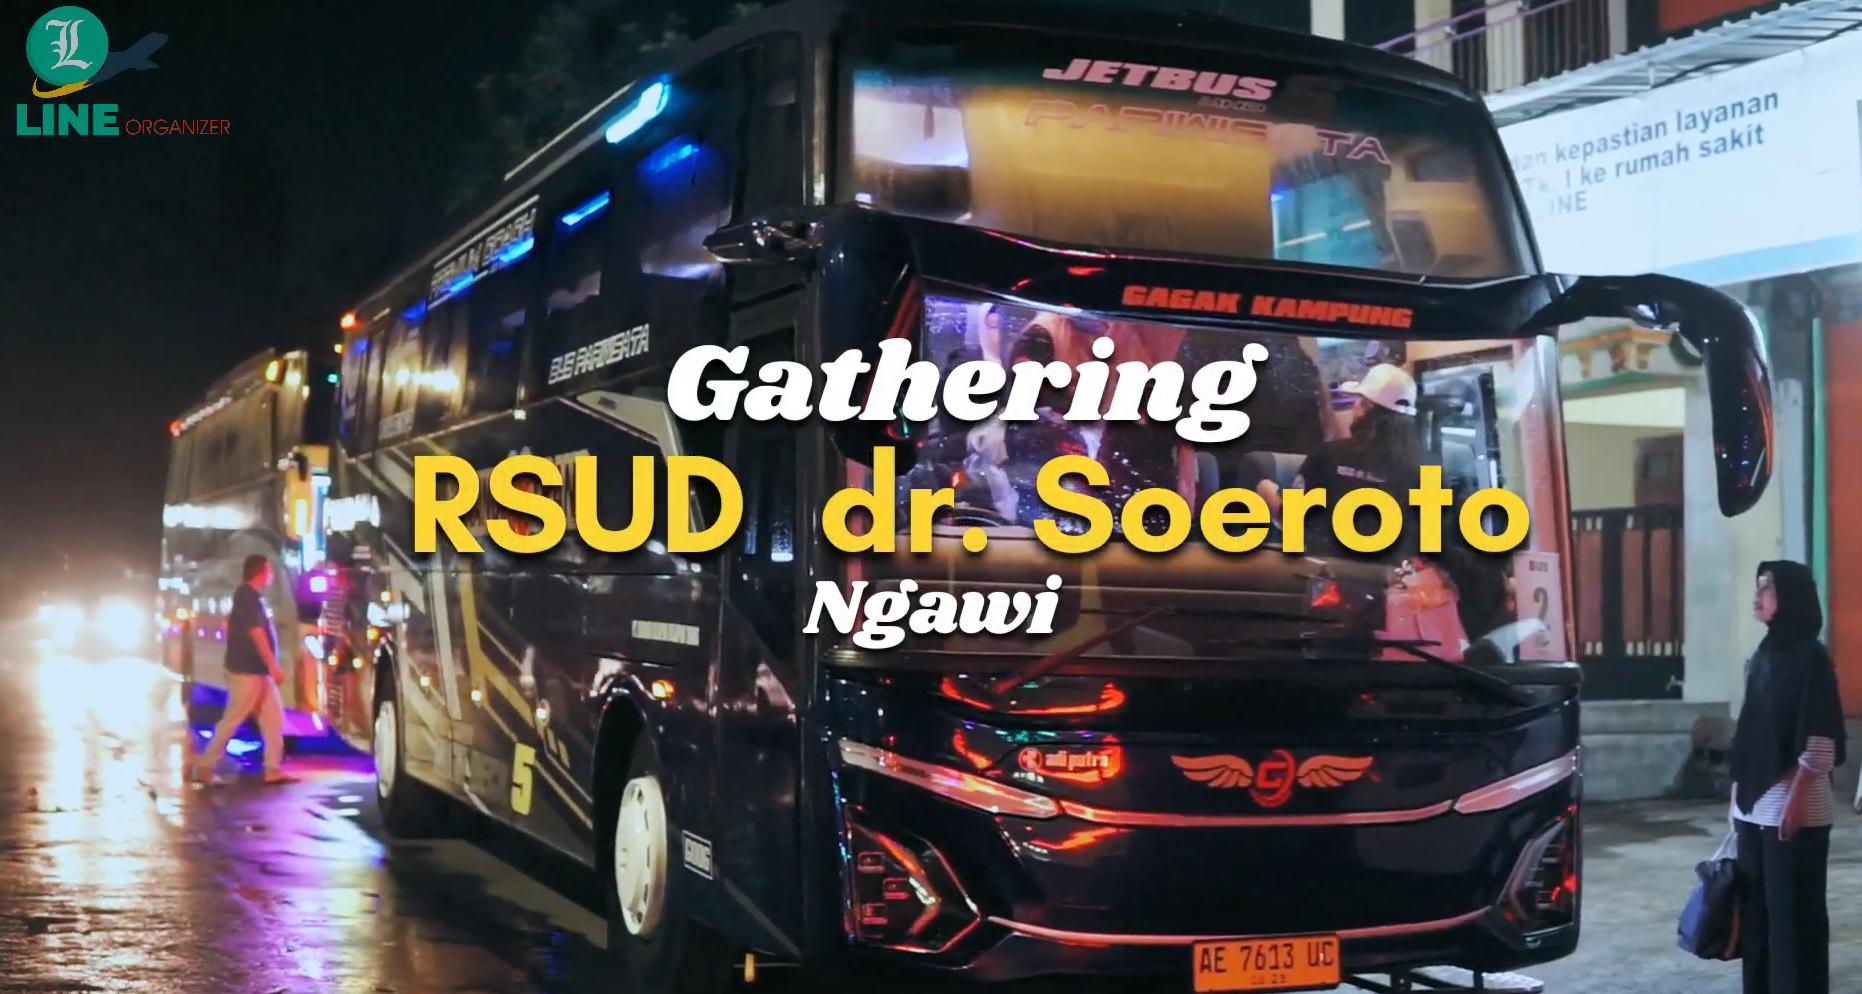 Fun Gathering RSUD Dr. Soeroto Ngawi Goes To Yogyakarta